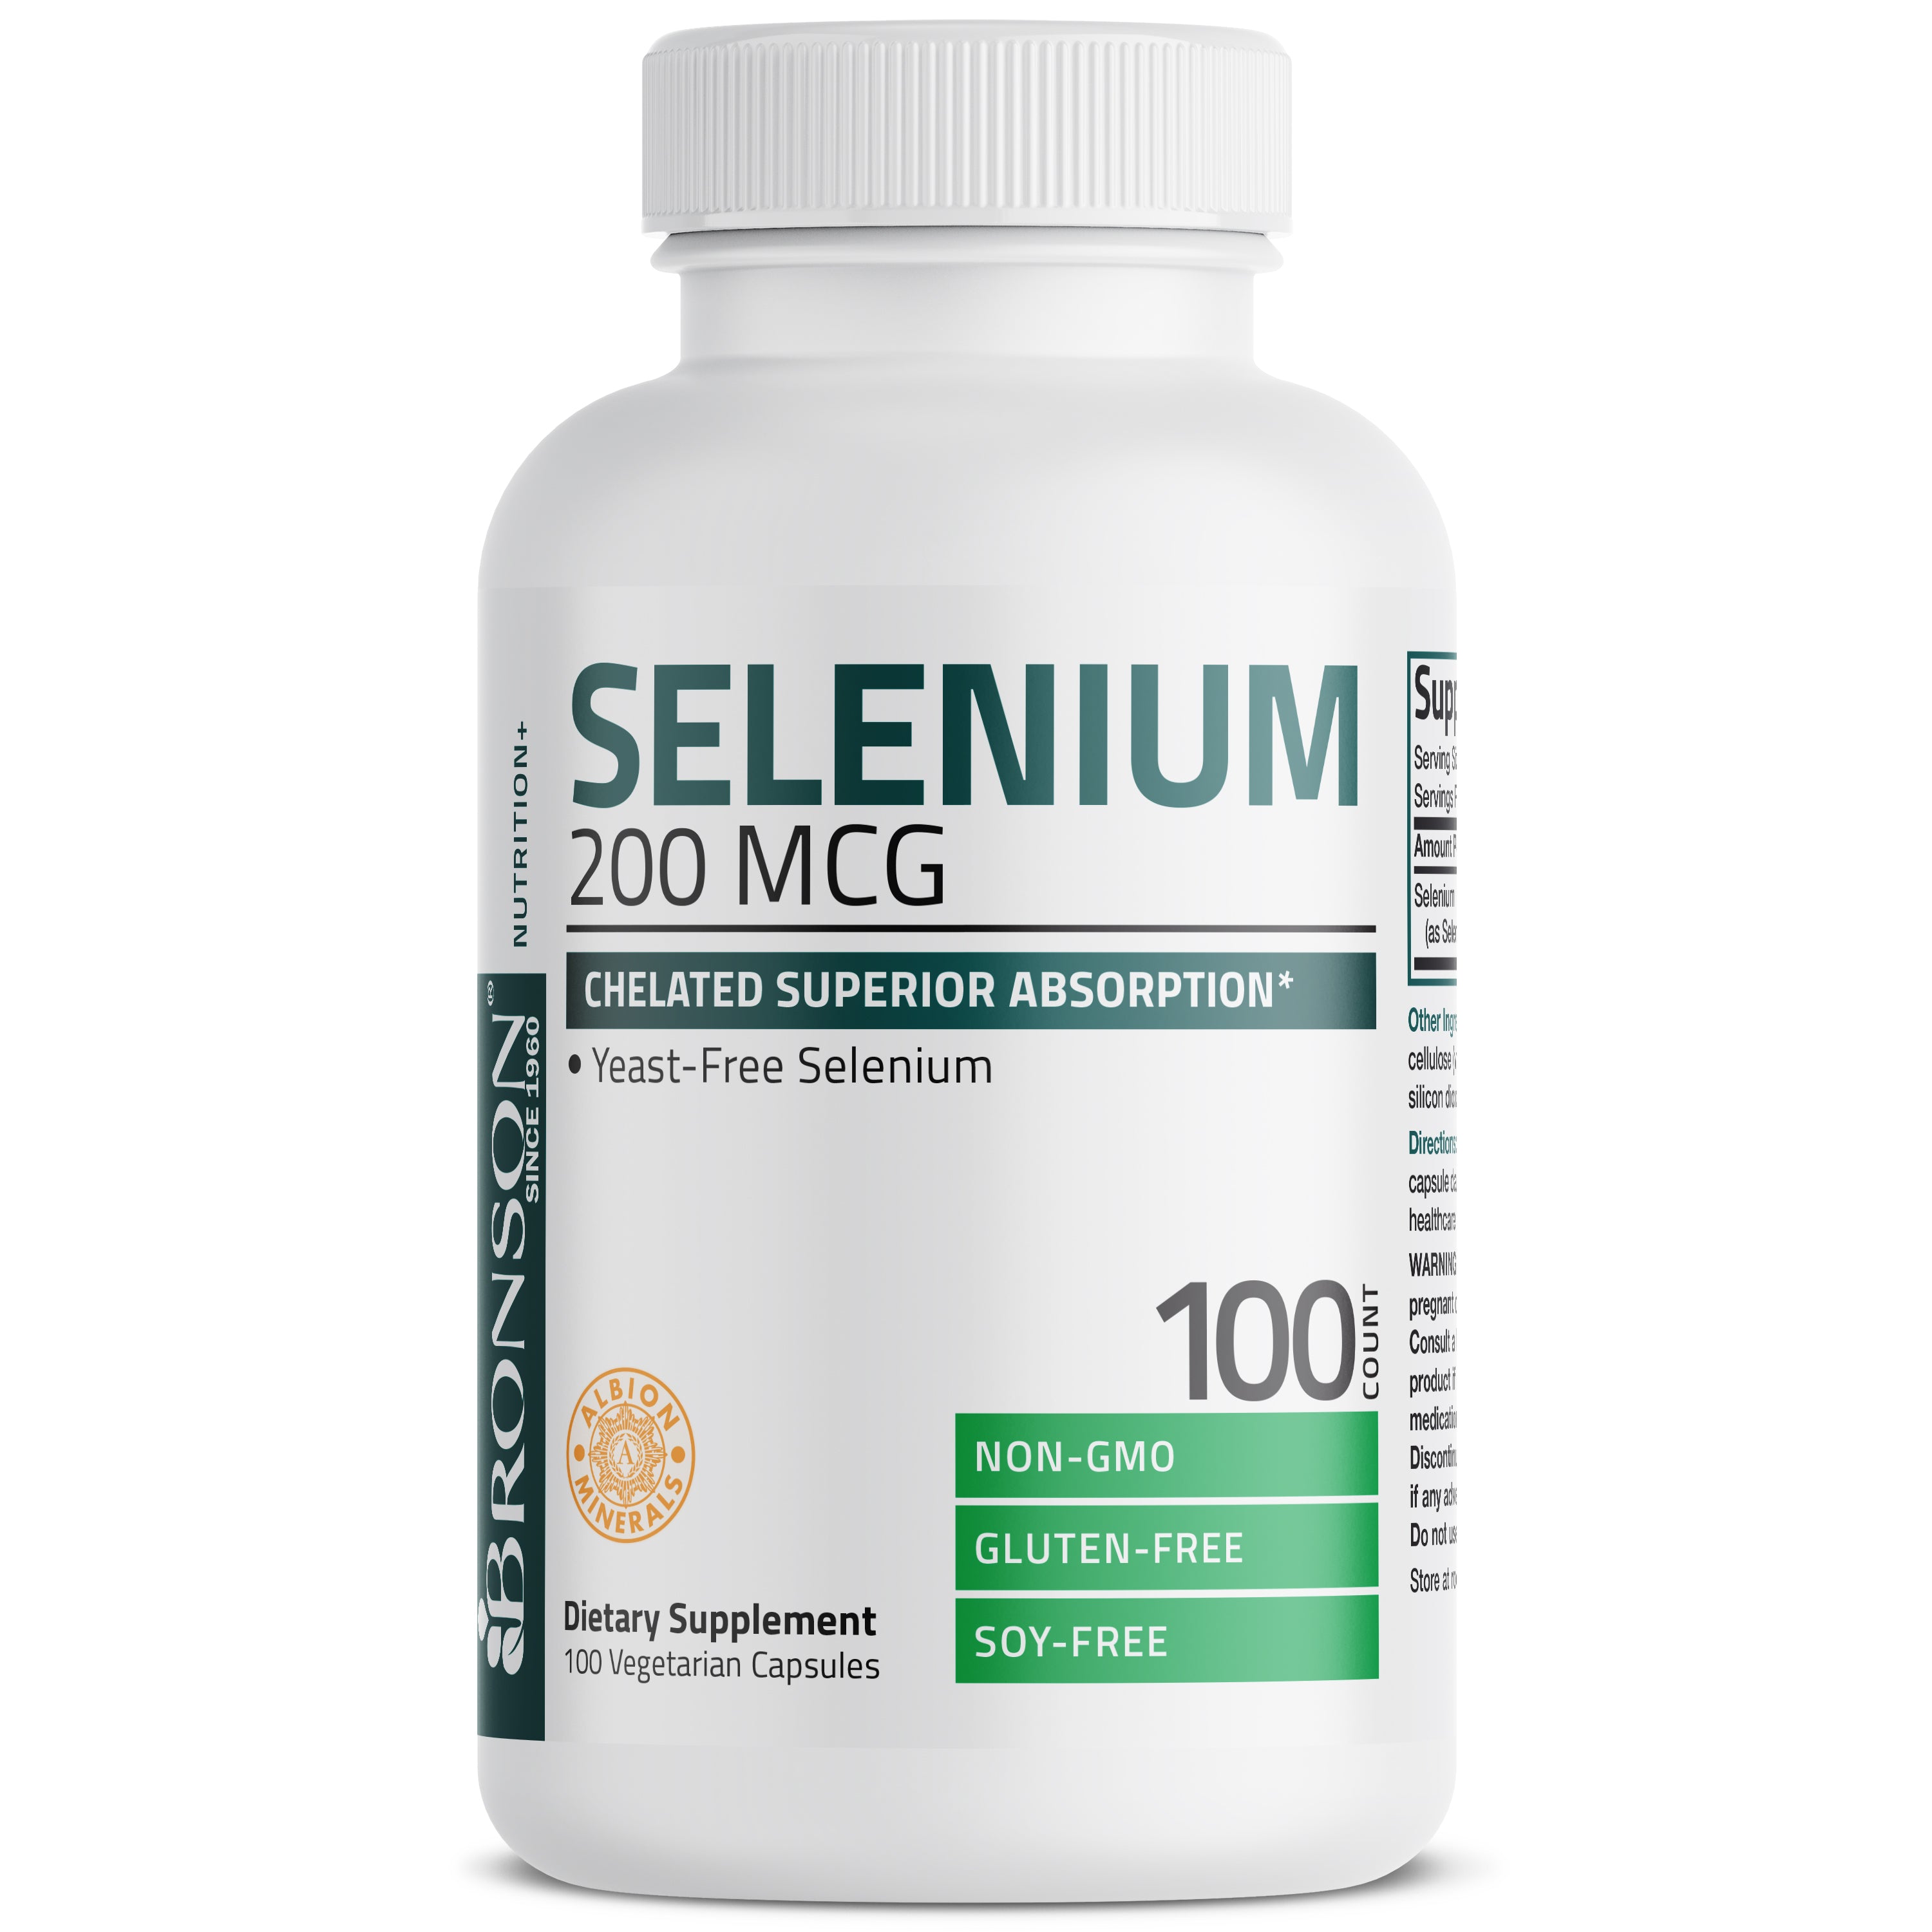 Selenium - 200 mcg view 9 of 6